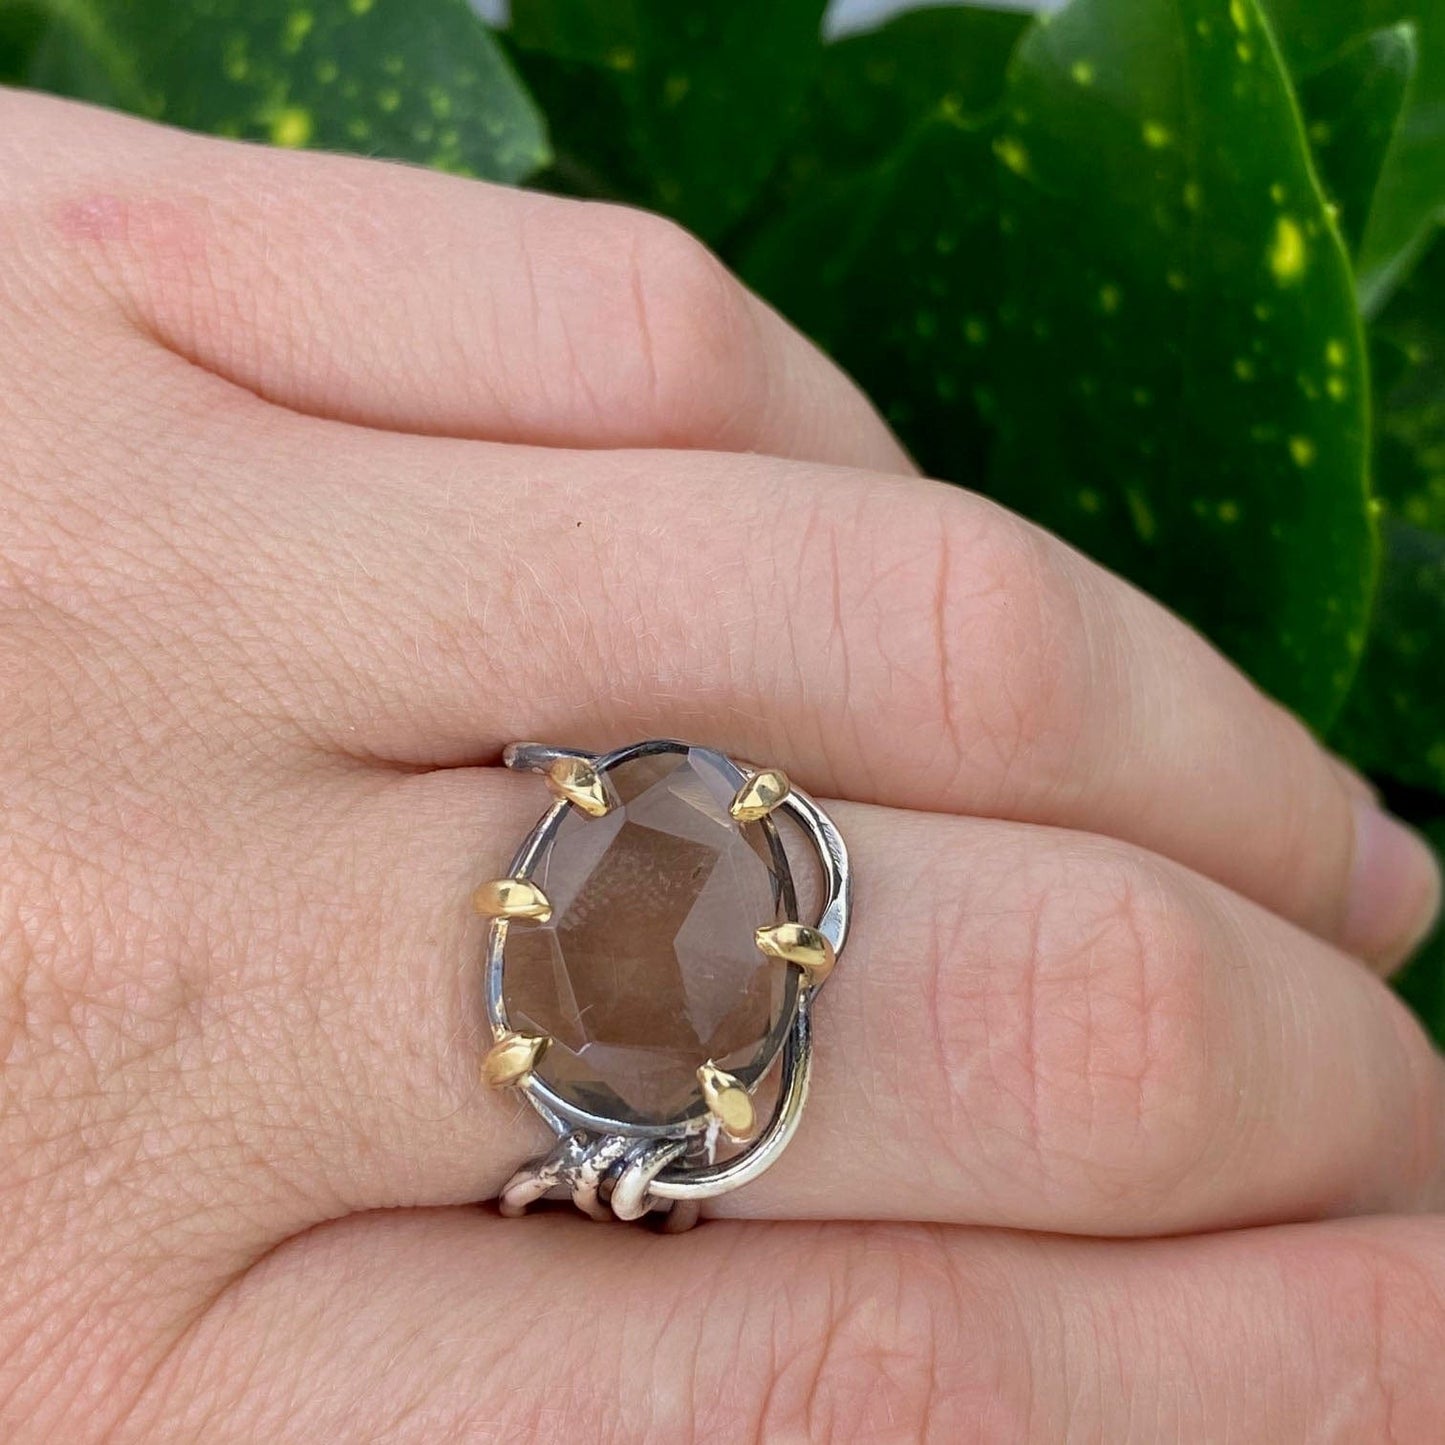 Silver and Gold Rose Cut Smokey Quartz Ring